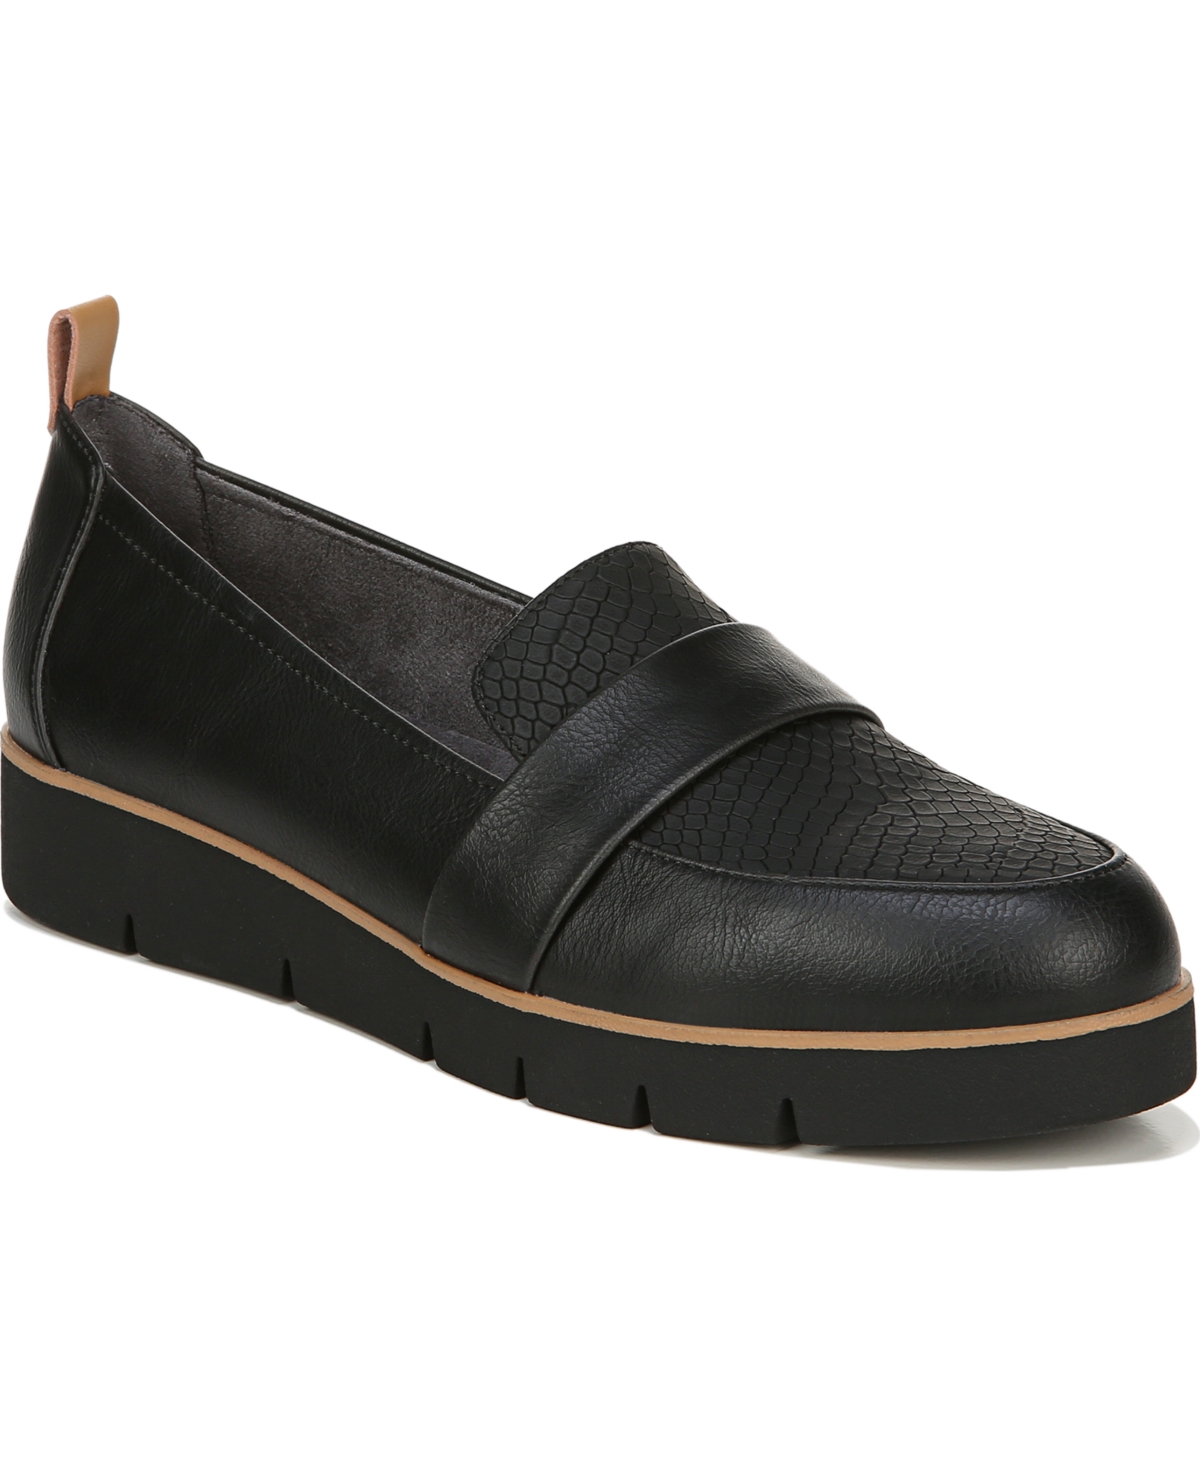 Dr. Scholl's Women's Webster Slip-on Loafers Women's Shoes